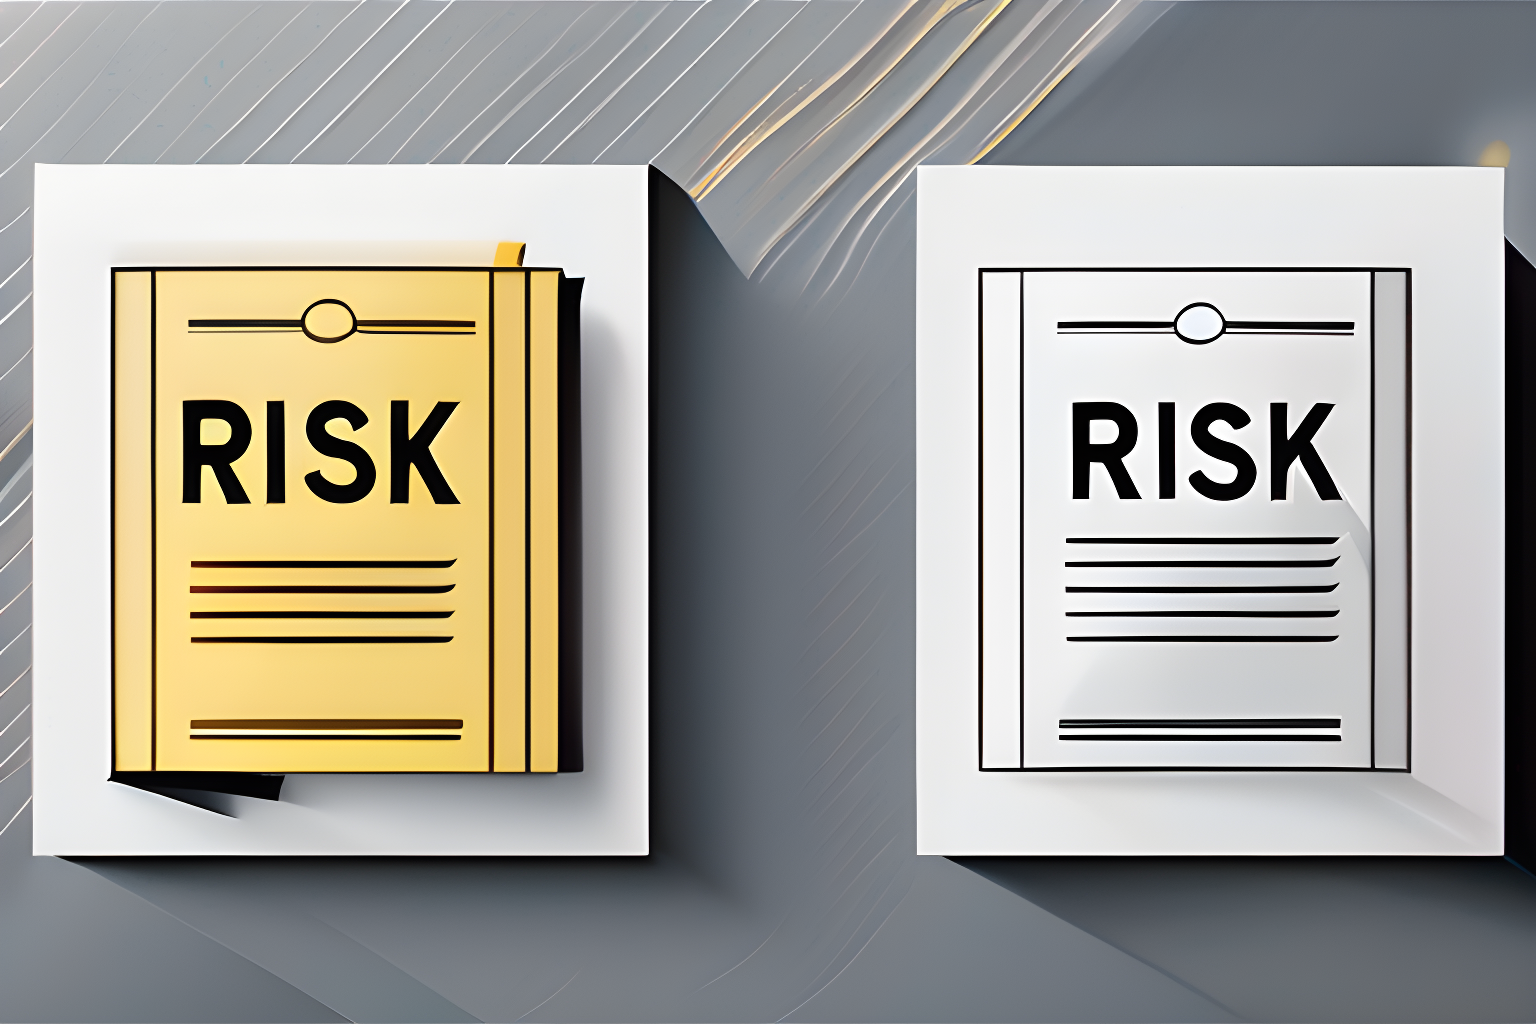 A binded document titled "risk management"